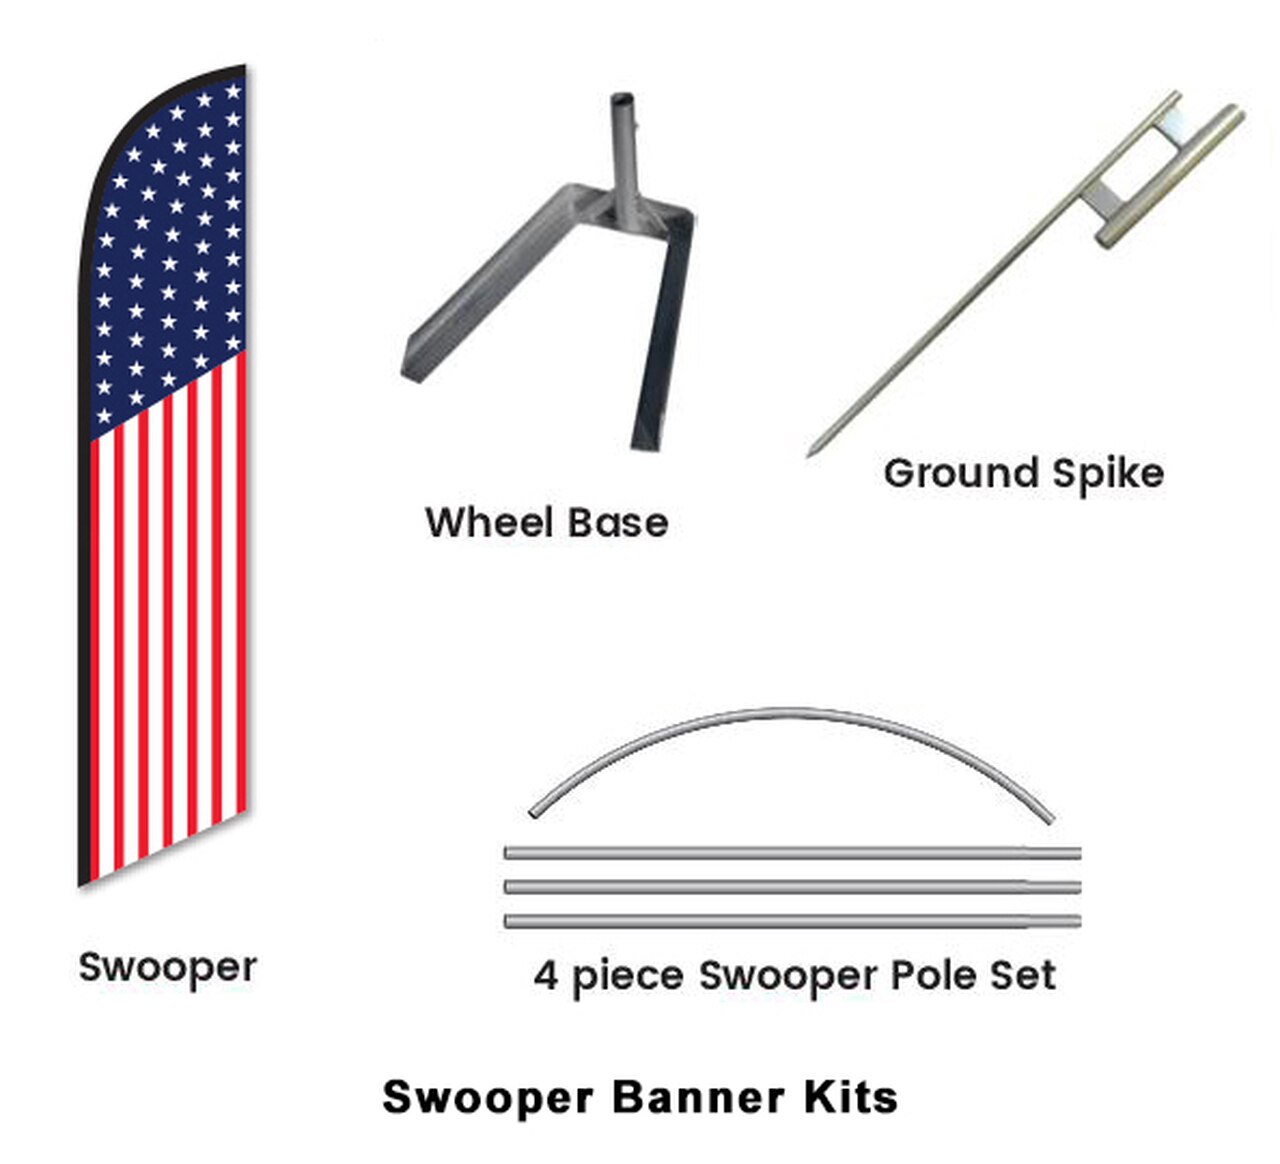 Swooper Banner Kits - Makes